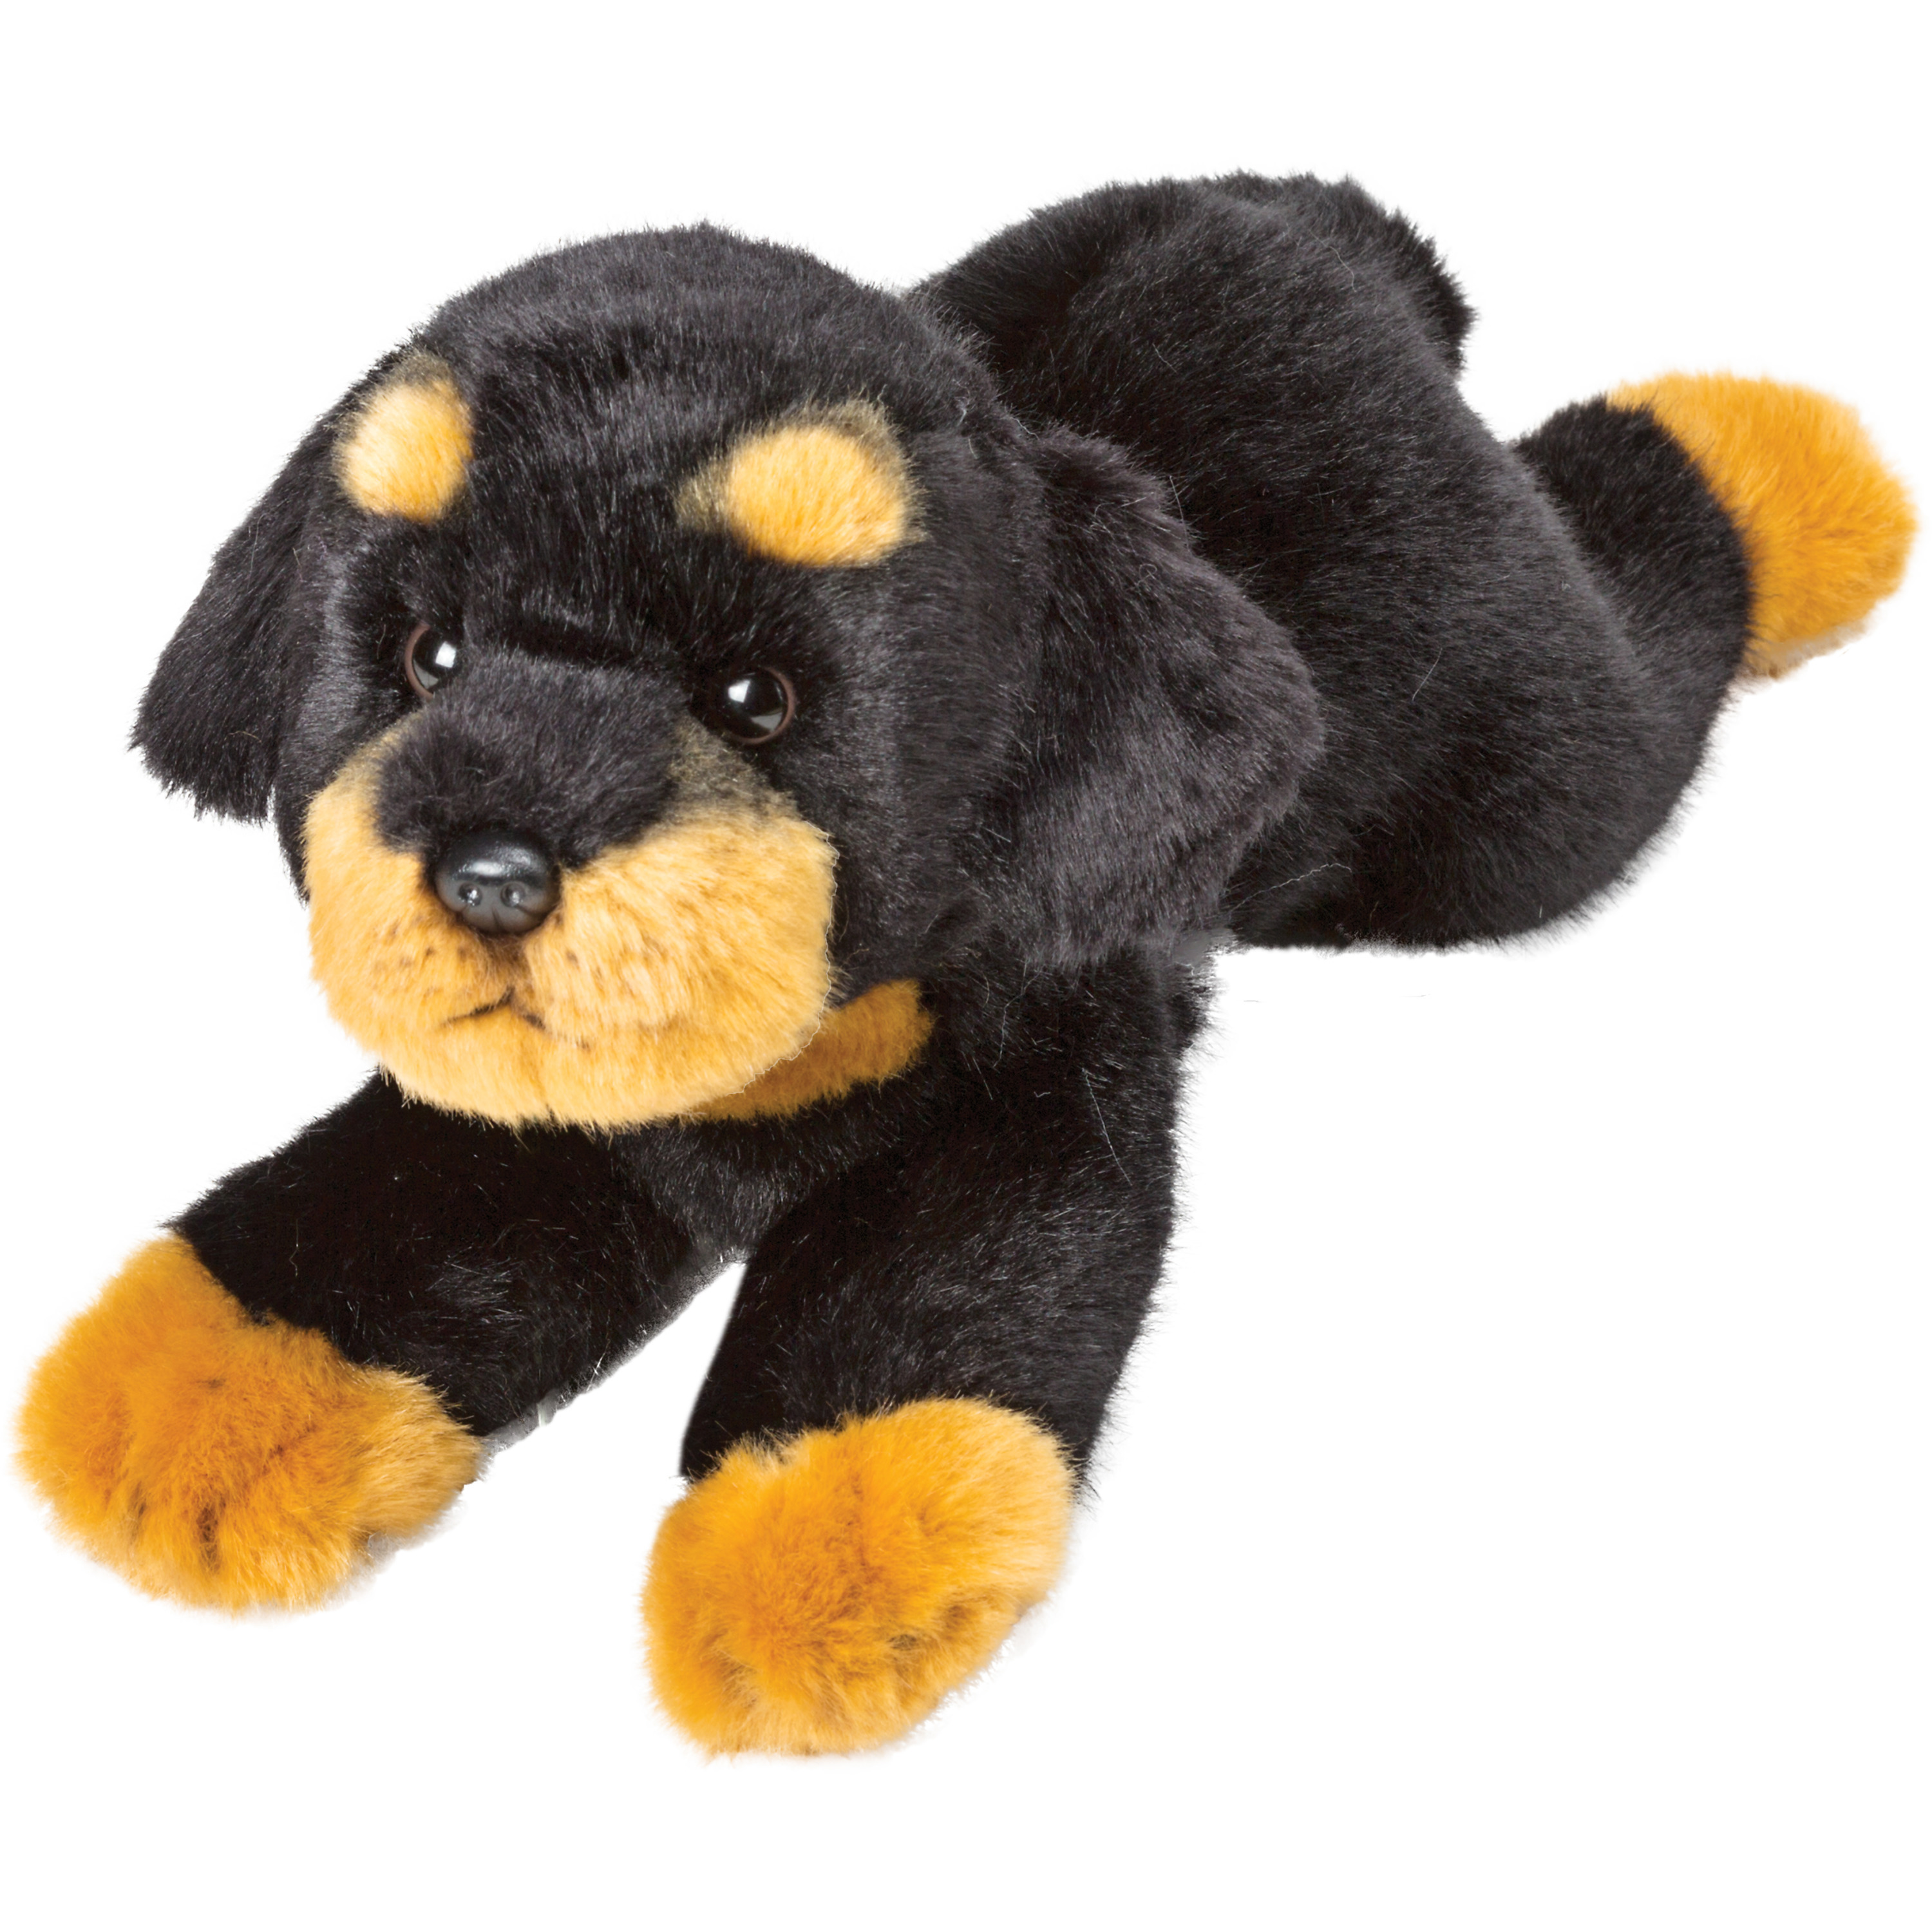 Pluche knuffel dieren Rottweiler hond 30 cm - Speelgoed knuffelbeesten - Honden soorten